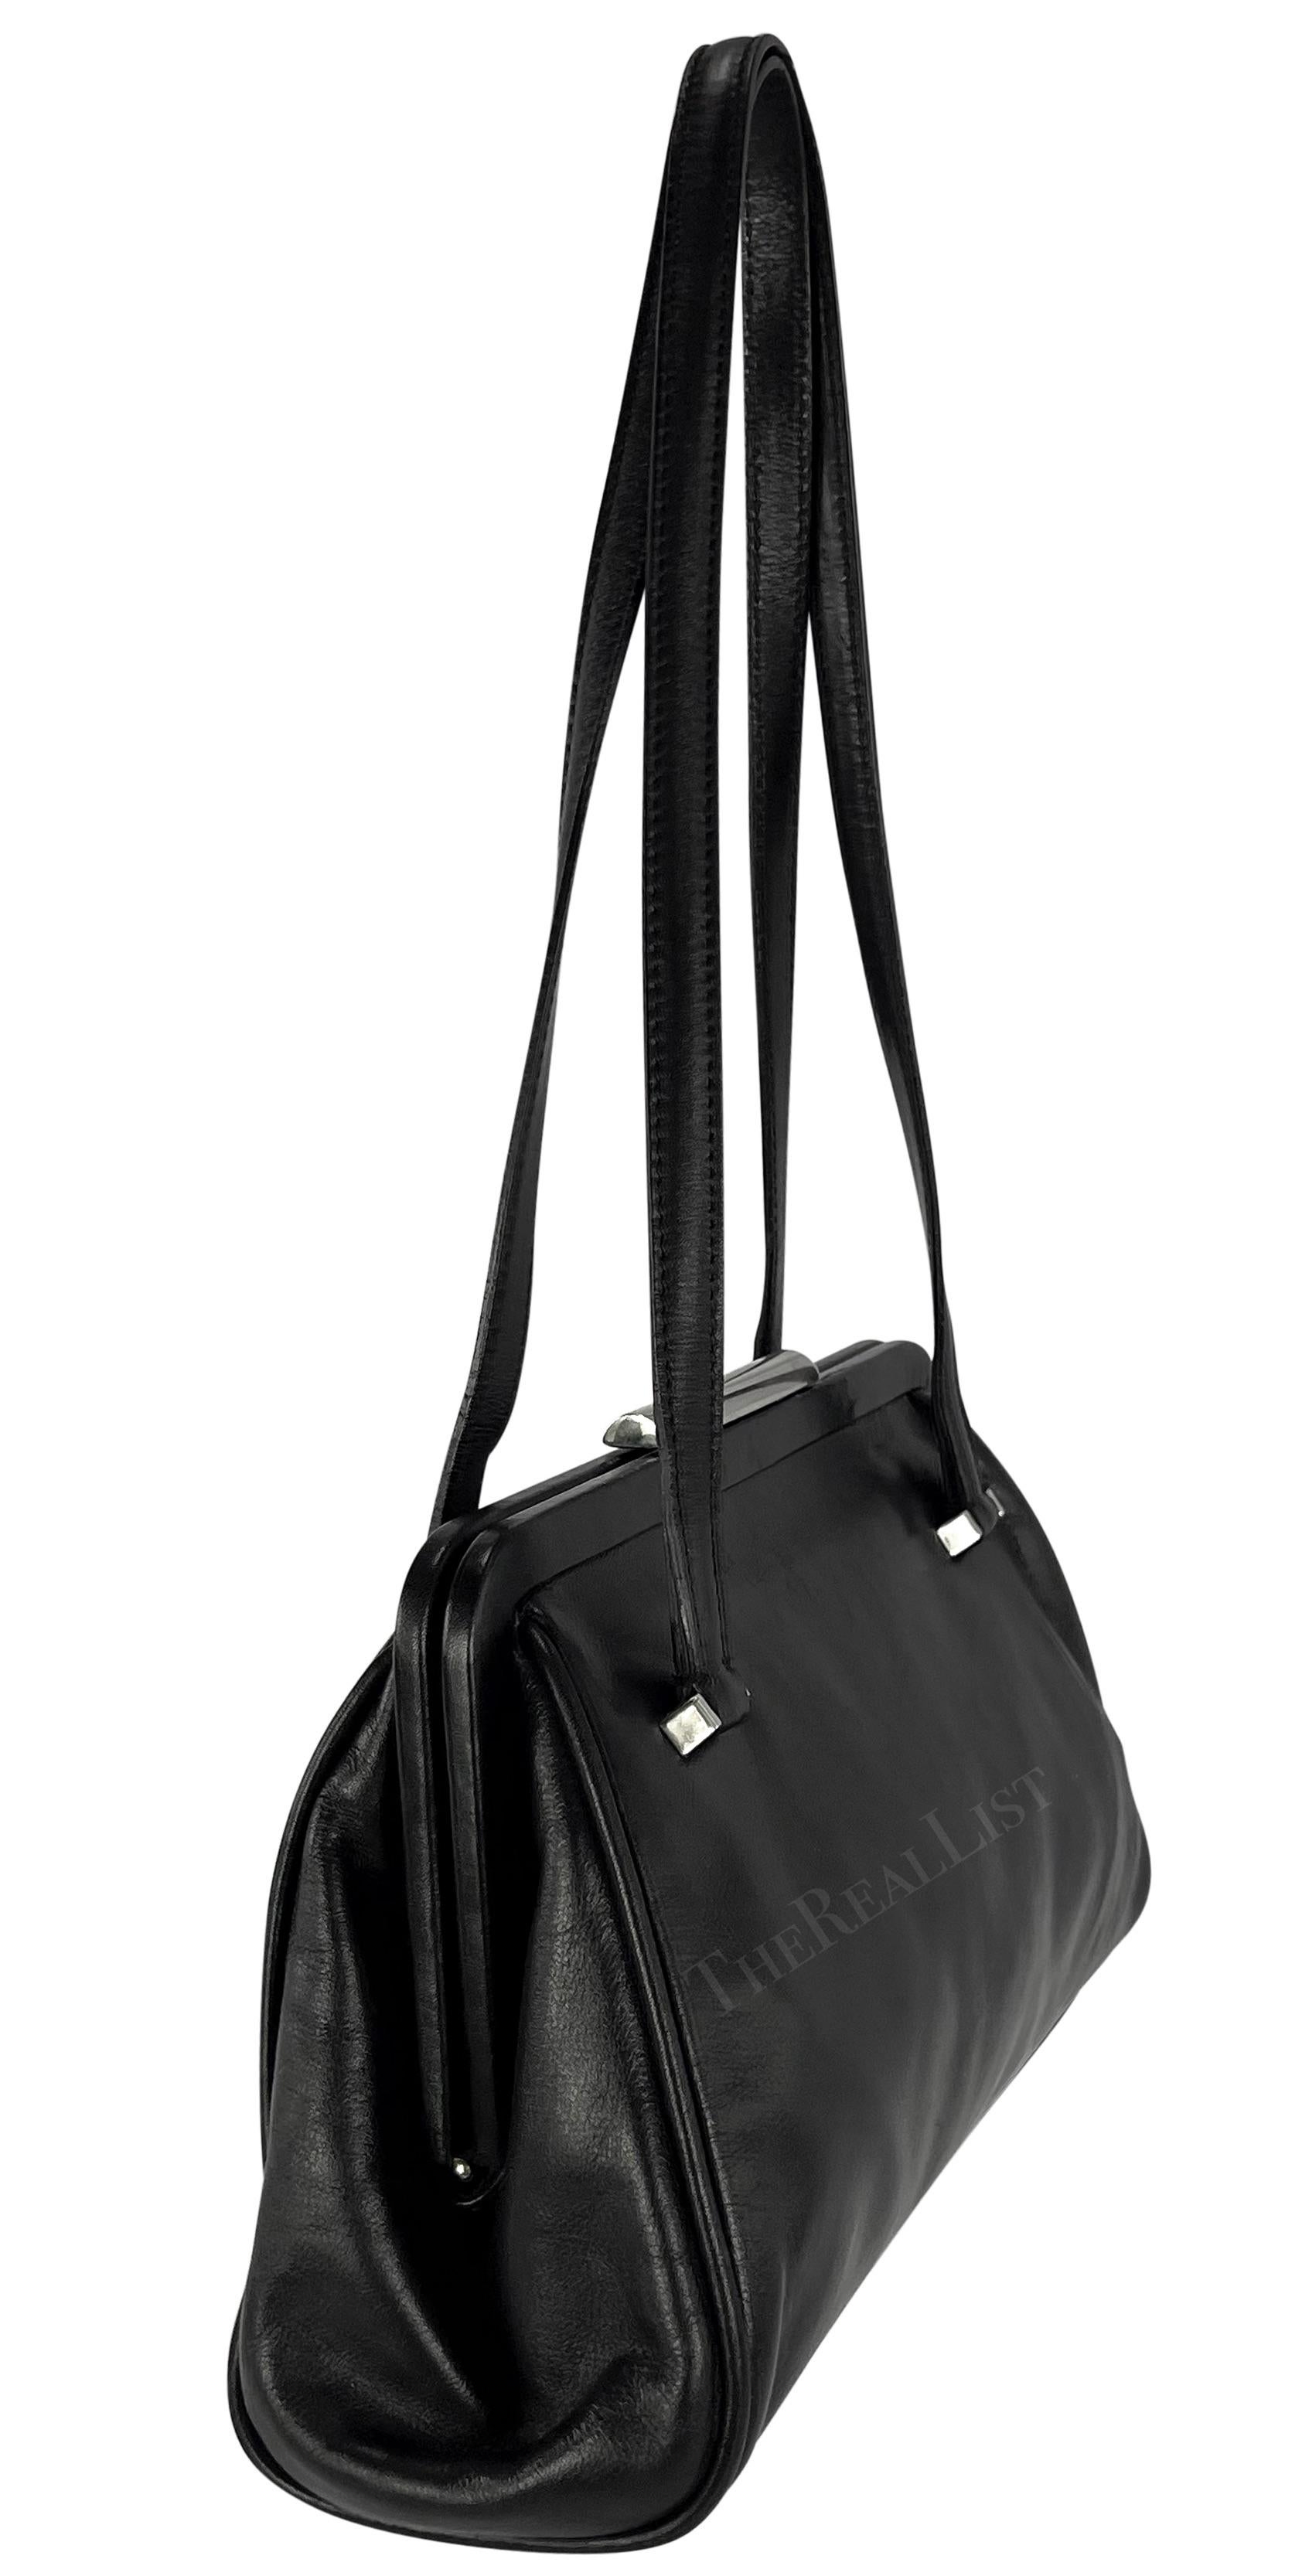 Women's S/S 2003 Dolce & Gabbana 'Sex & Love' Black Leather Mini Shoulder Bag For Sale